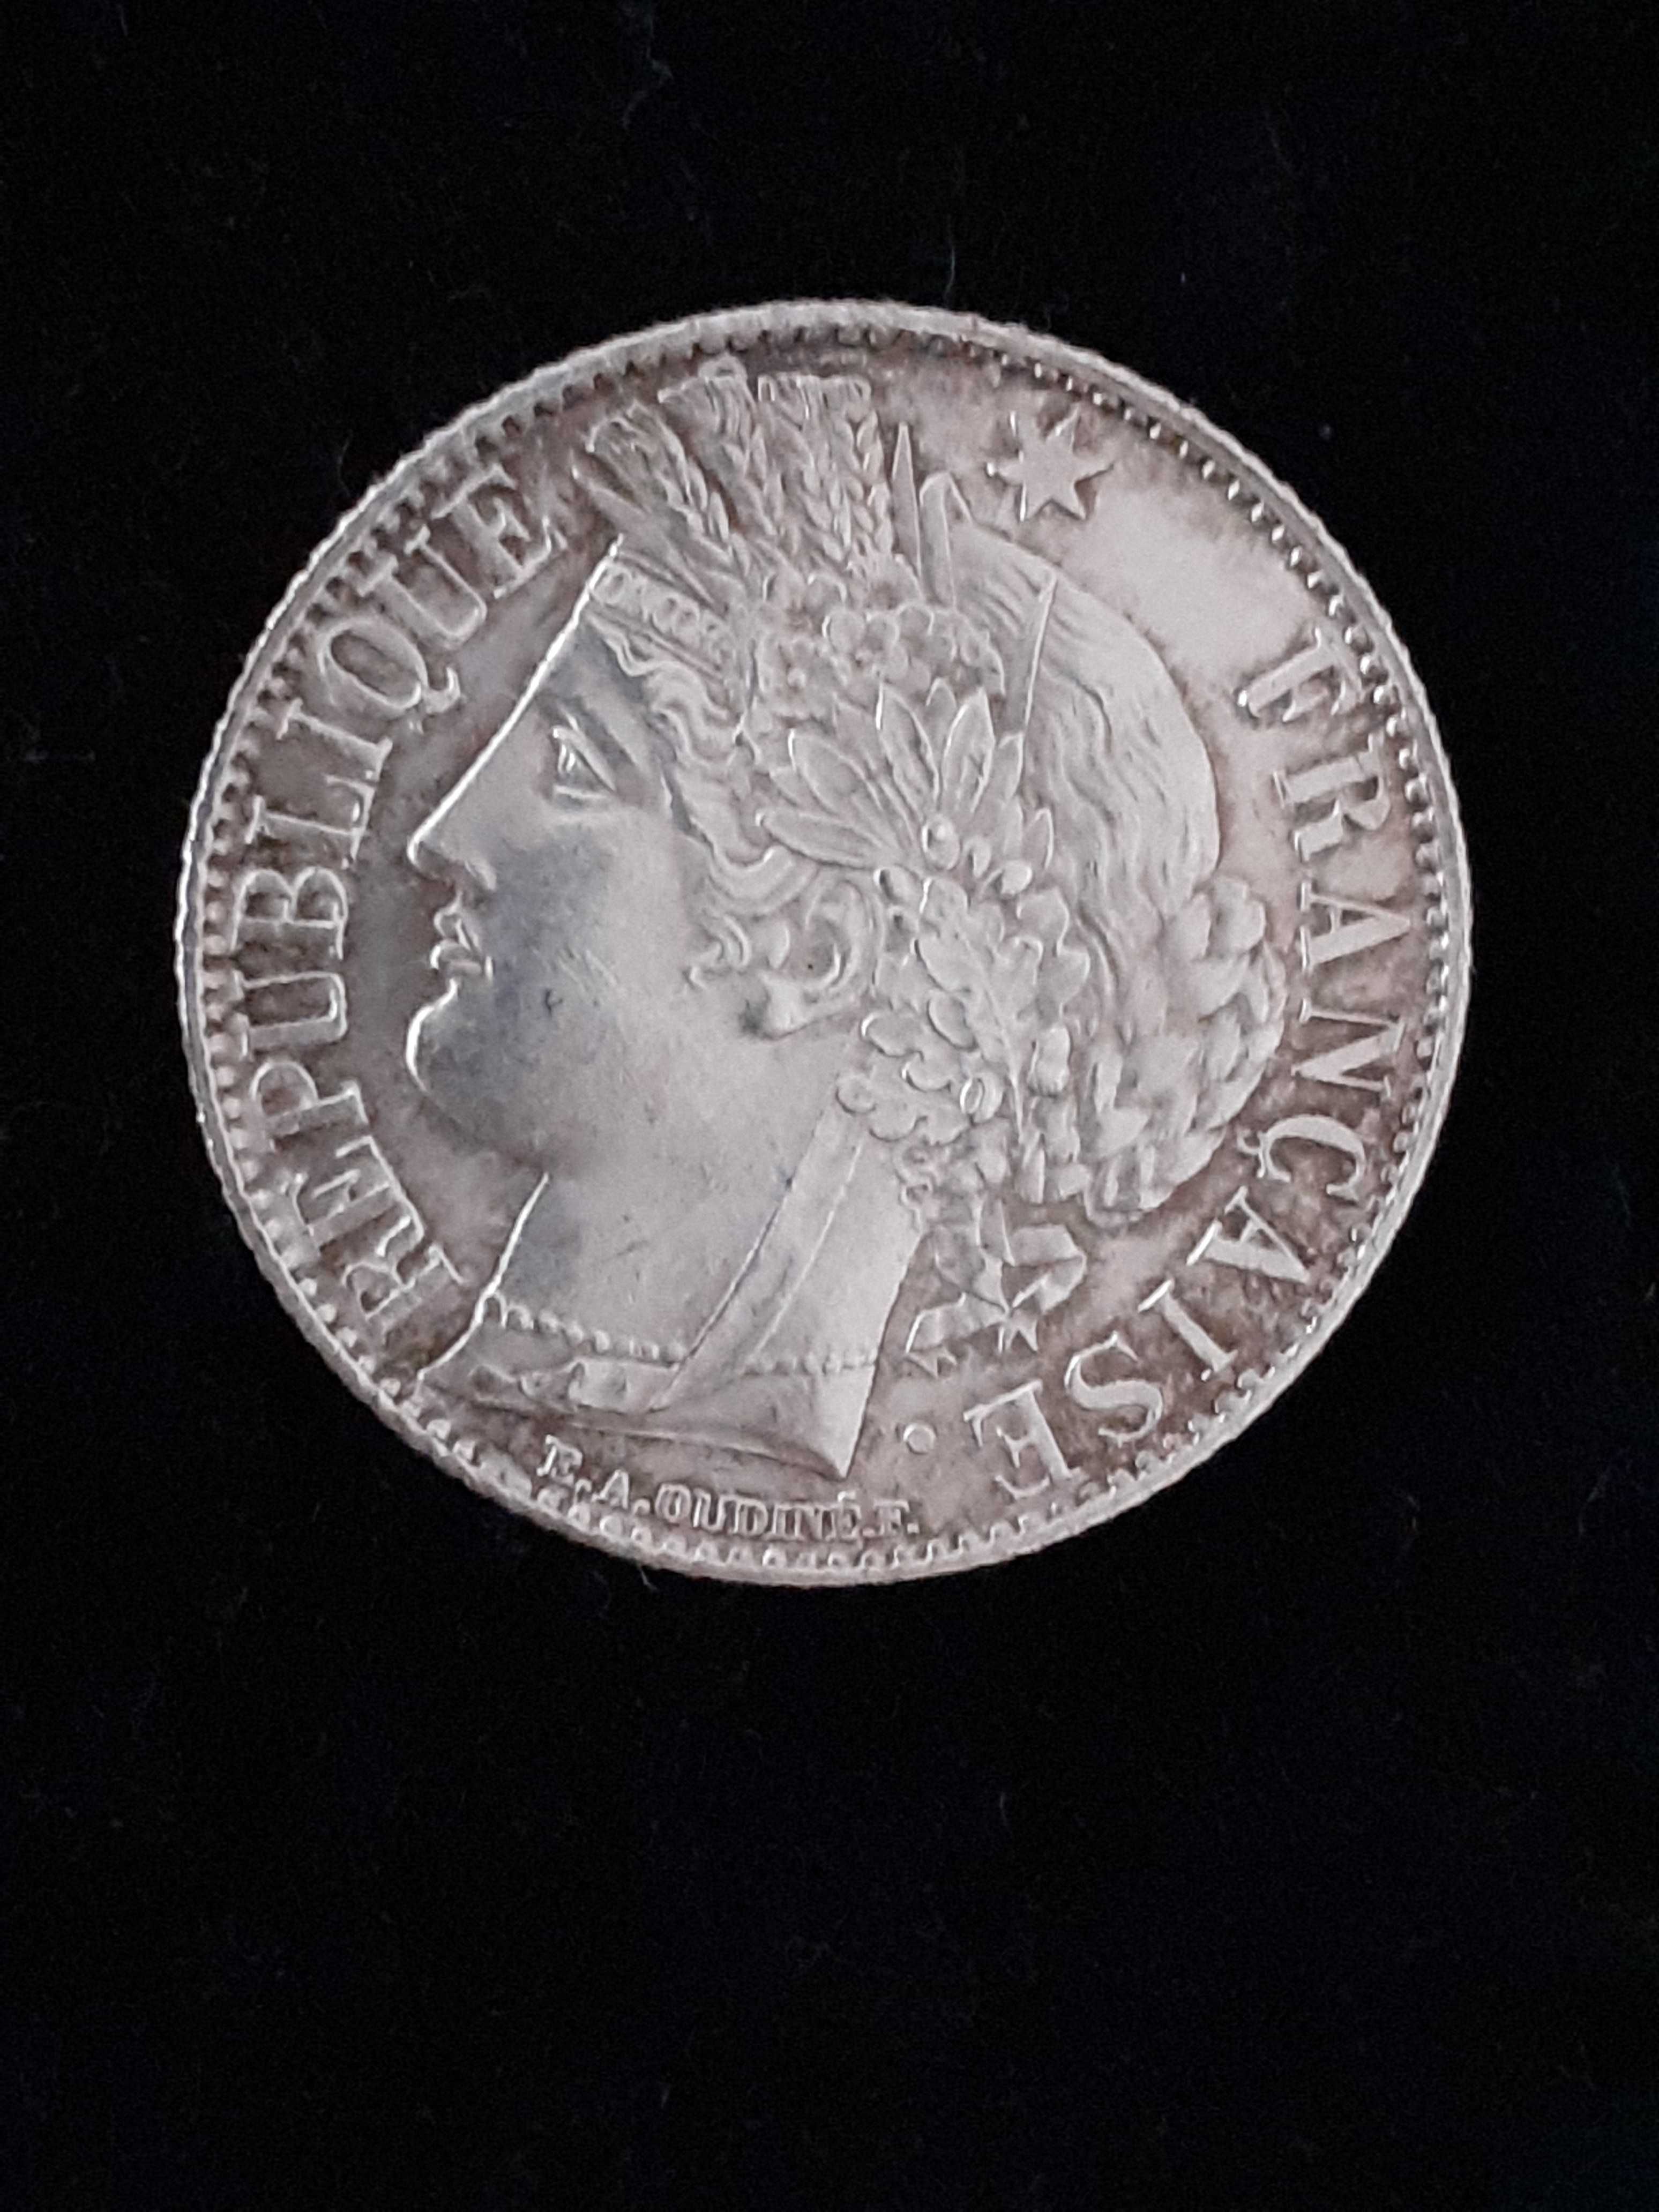 2,50 escudos de 1964 rara- 1 Franc francês de 1888 bonita patine